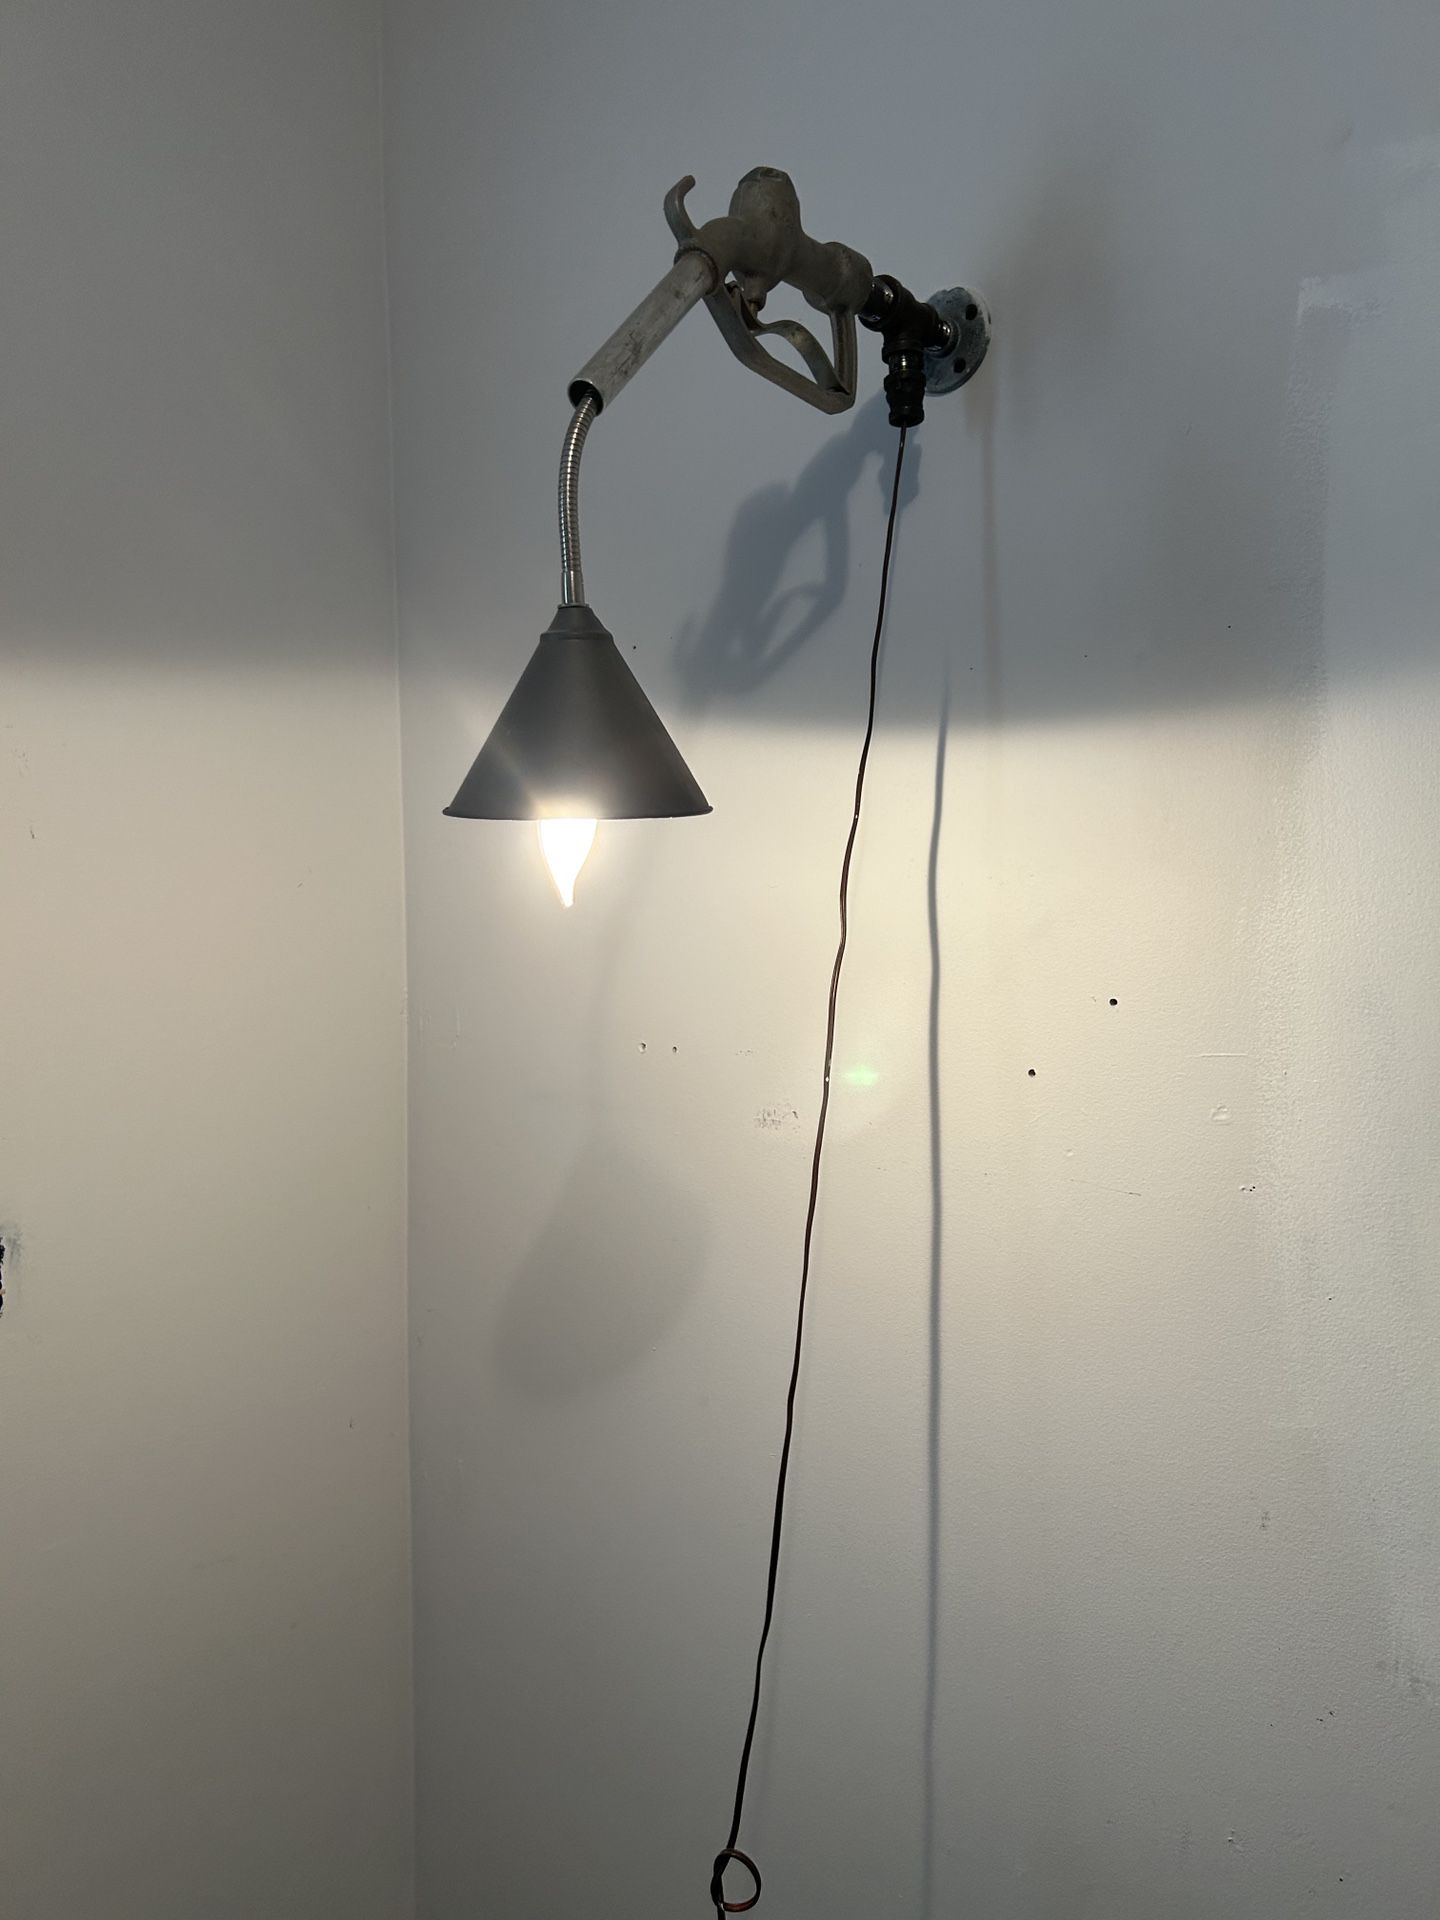 Custom Lamp For Garage Or Man Cave 